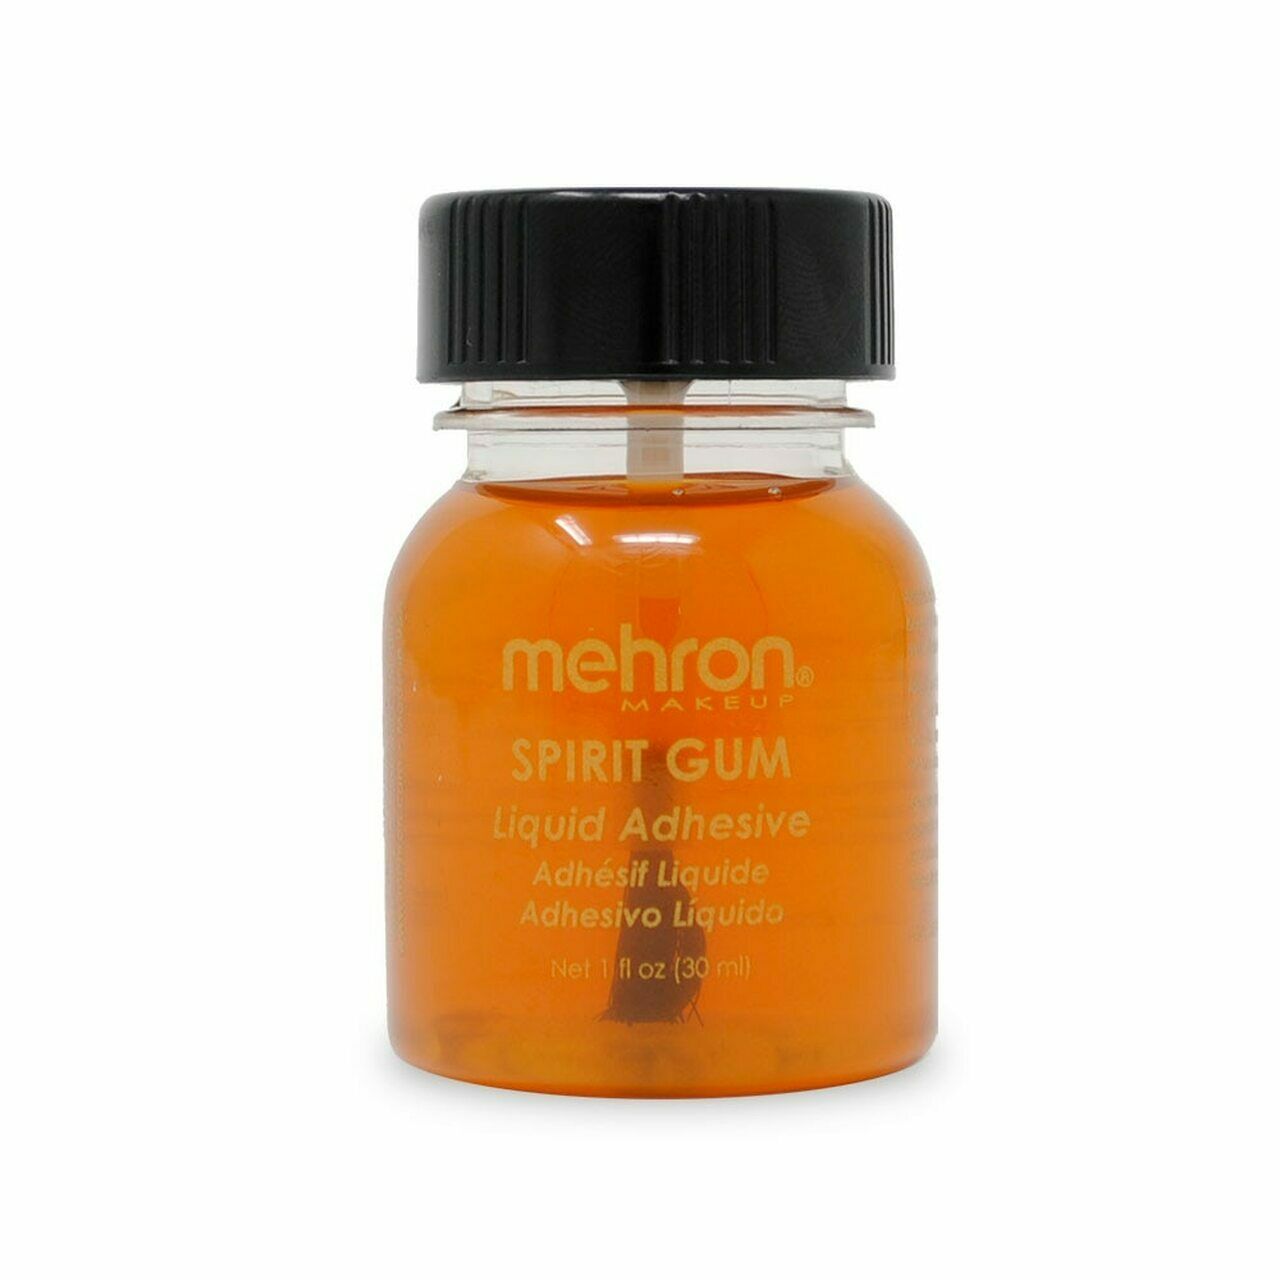 Mehron Spirit Gum Adhesive Glue Crepe Hair Wig Prosthetic Noses Bald Caps Makeup